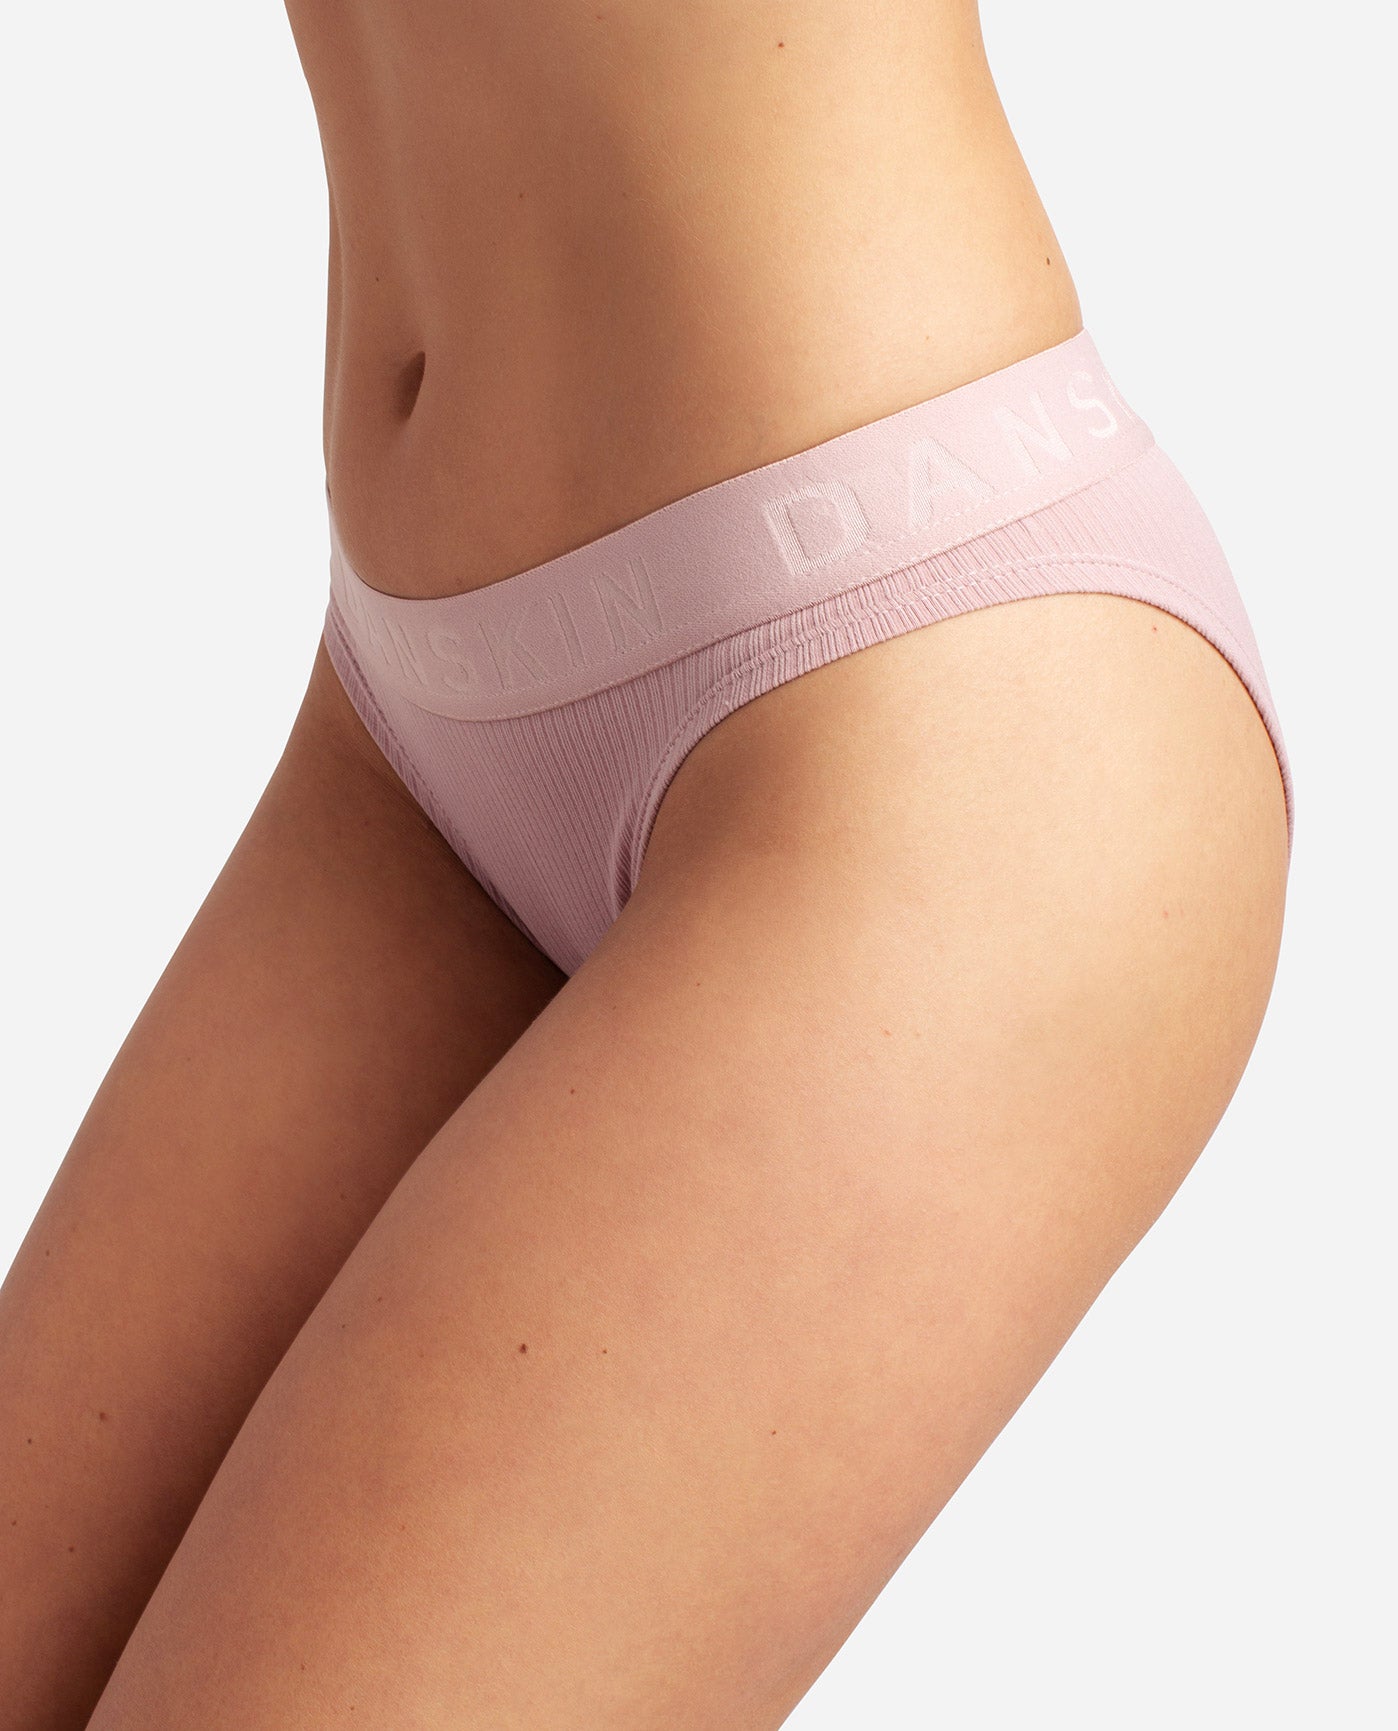 Danskin Rib Textured Seamless Panties - 5-Pack, Boyshorts - Save 71%